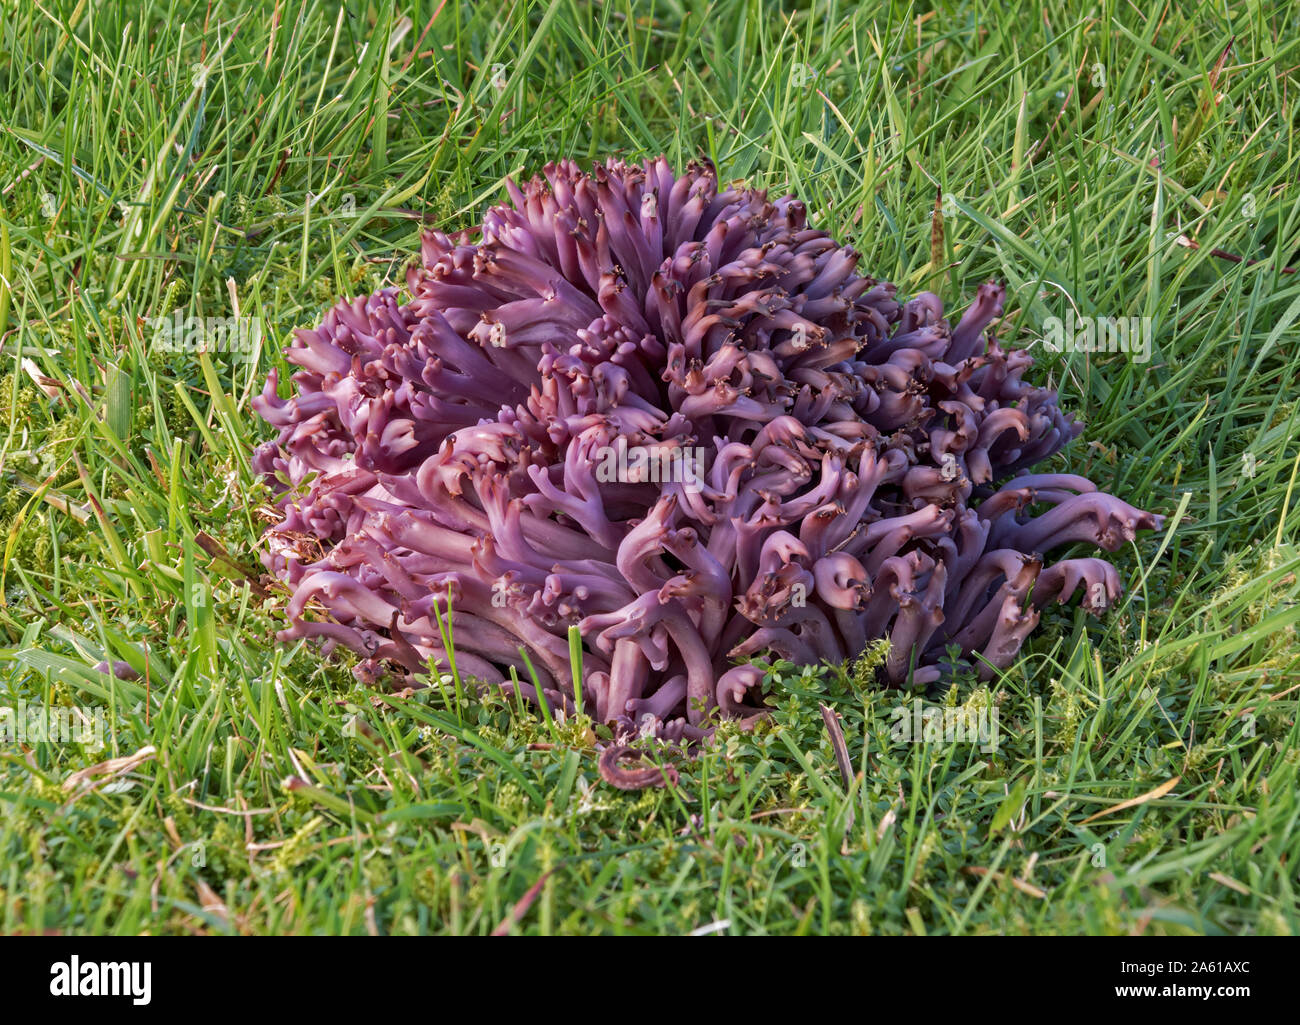 Clavaria zollingeri (púrpura o violeta Coral coral). Foto de stock